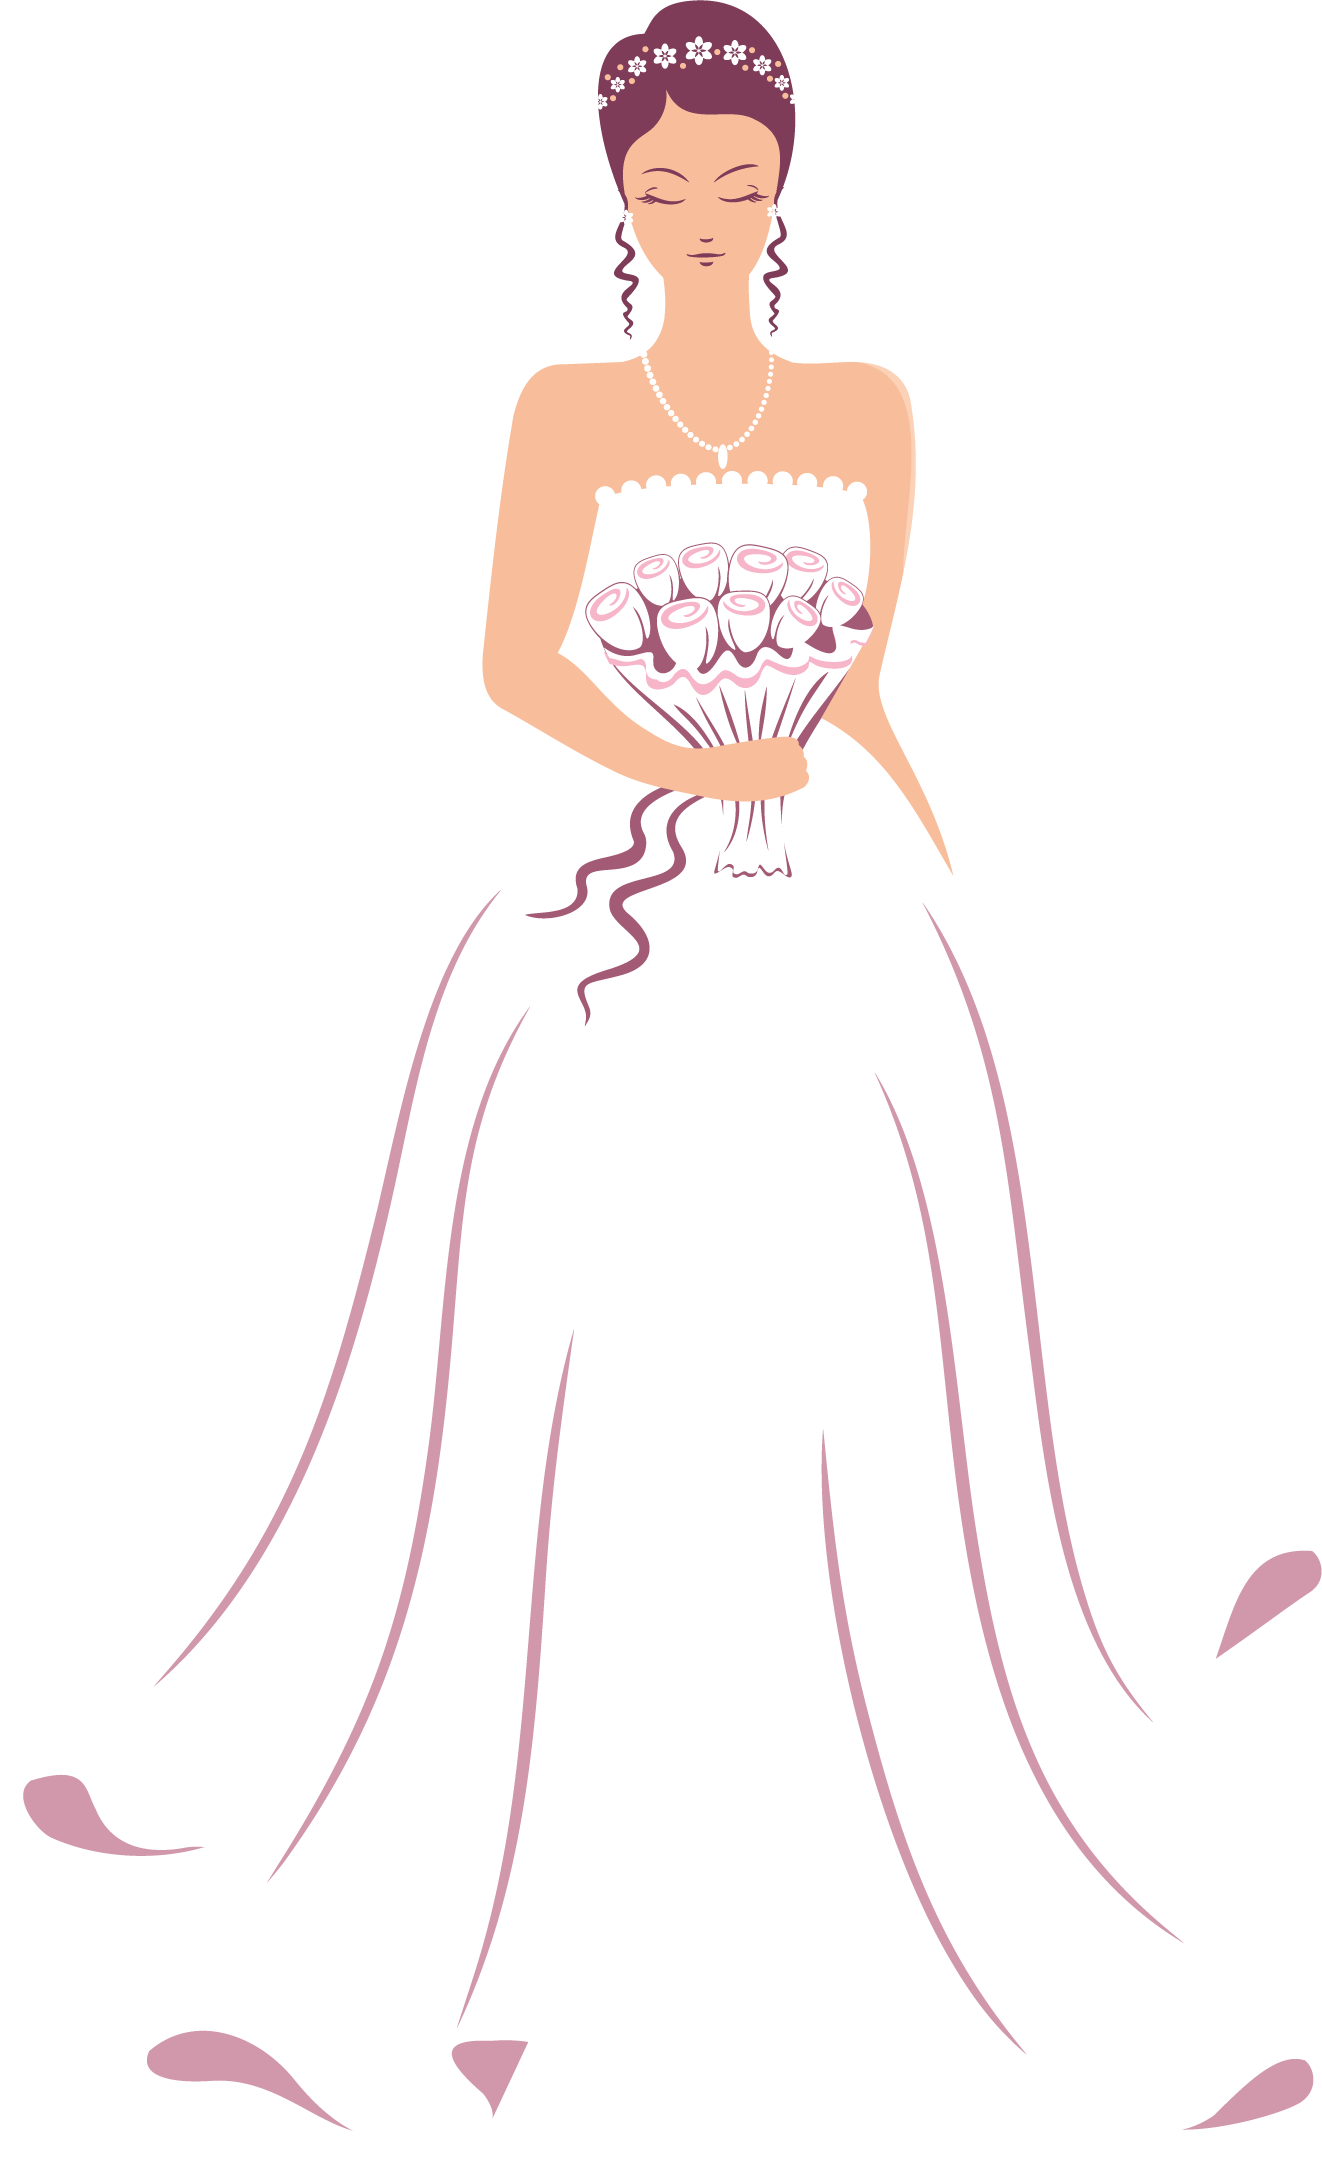 A Woman In A Wedding Dress